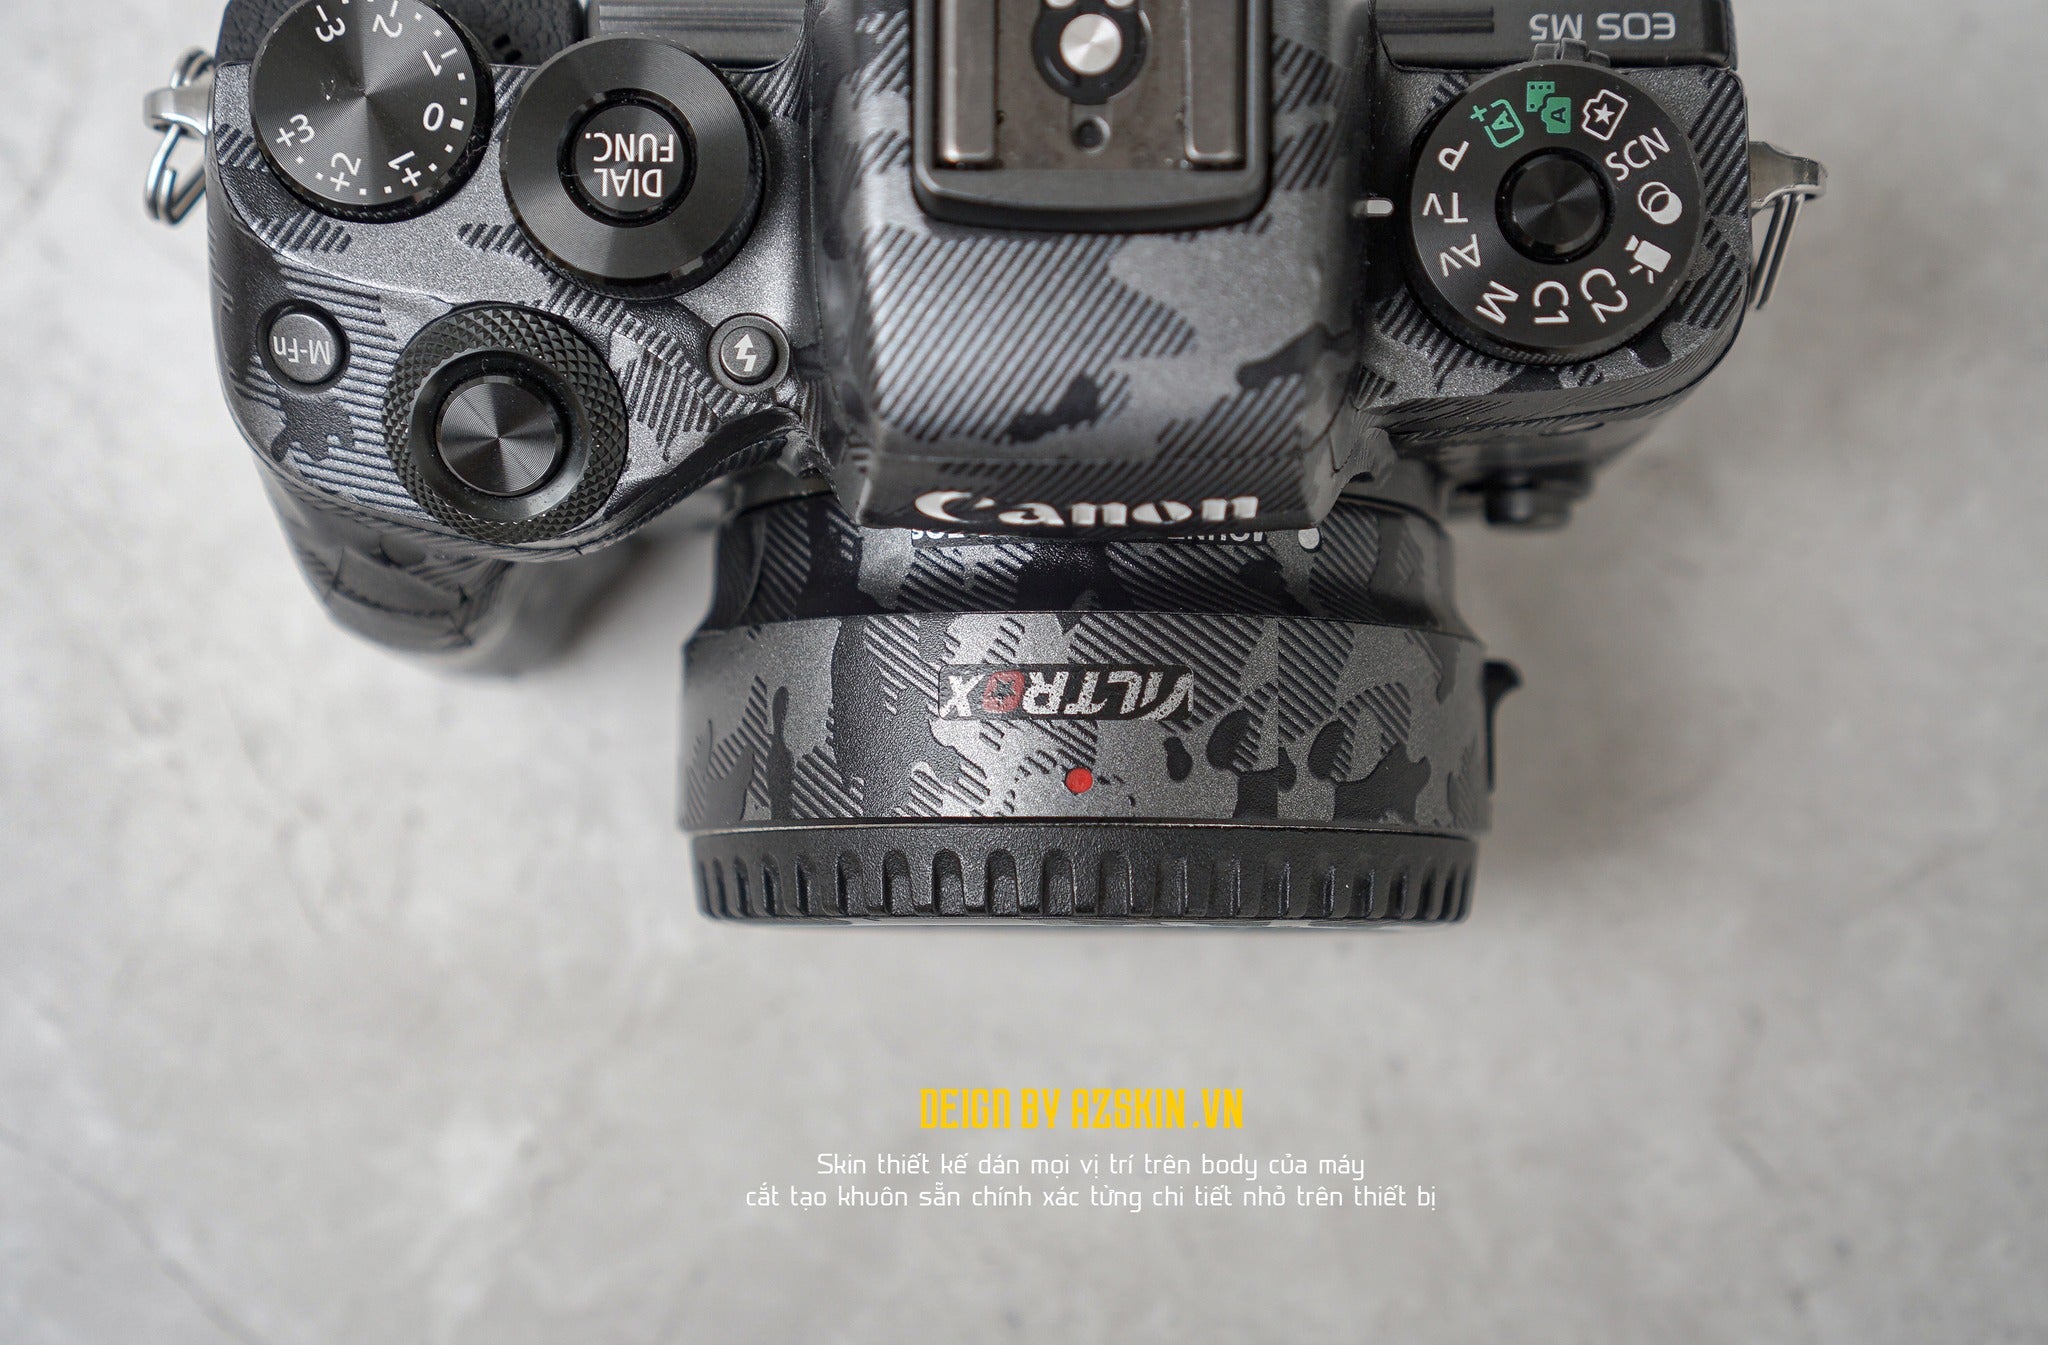 Skin máy ảnh Canon thiết kế bởi Azskin